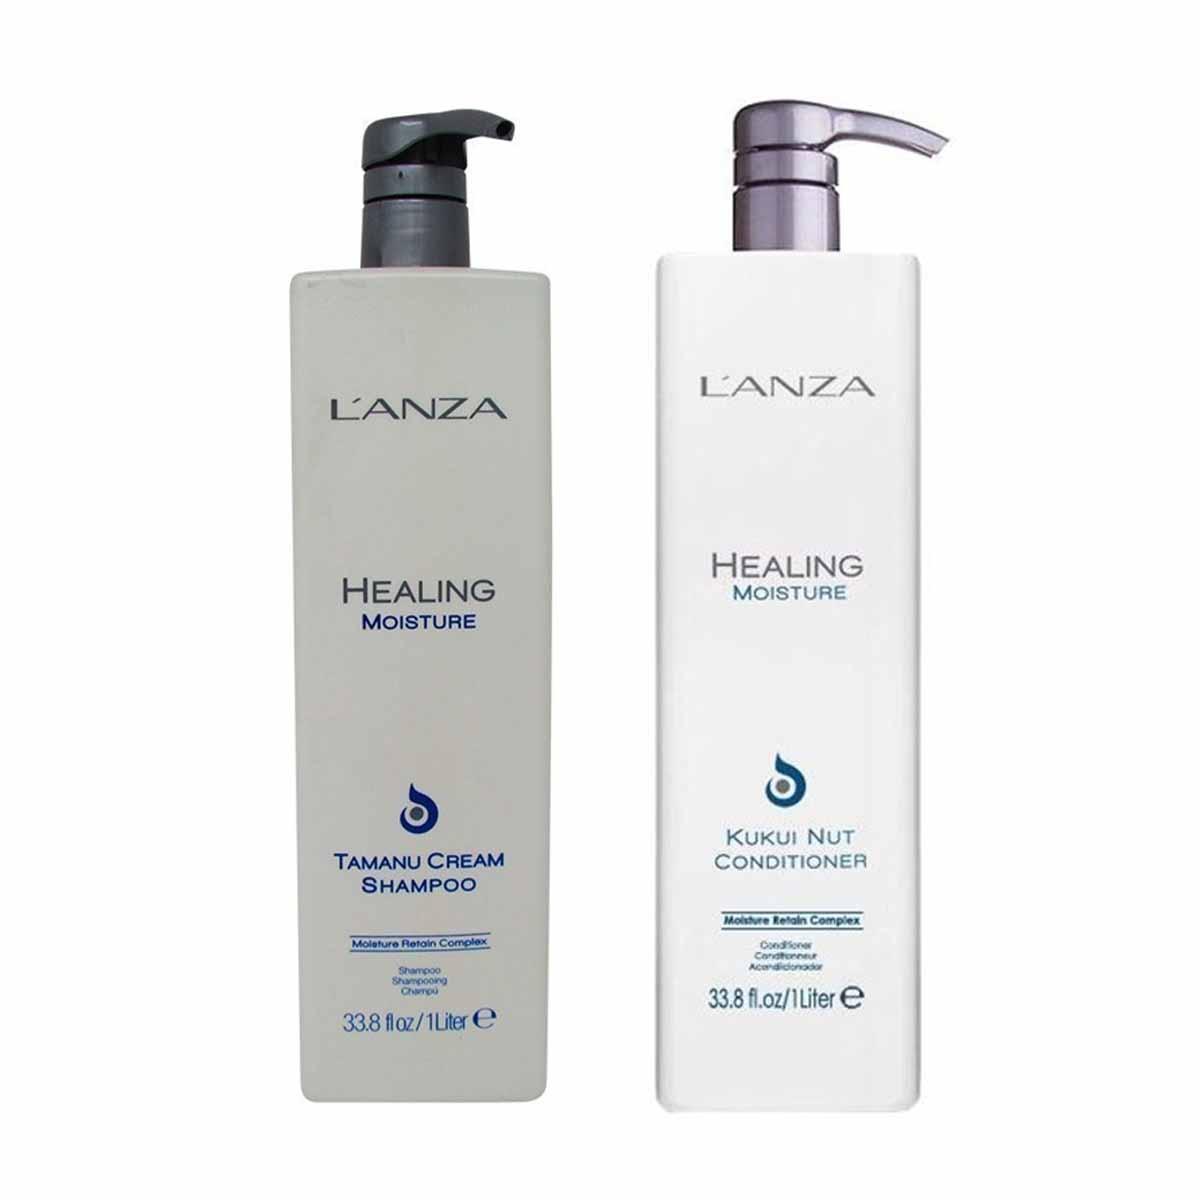 Kit Lanza Healing Moisture Tamanu Cream Sh 1 litro e Cond 1 Litro